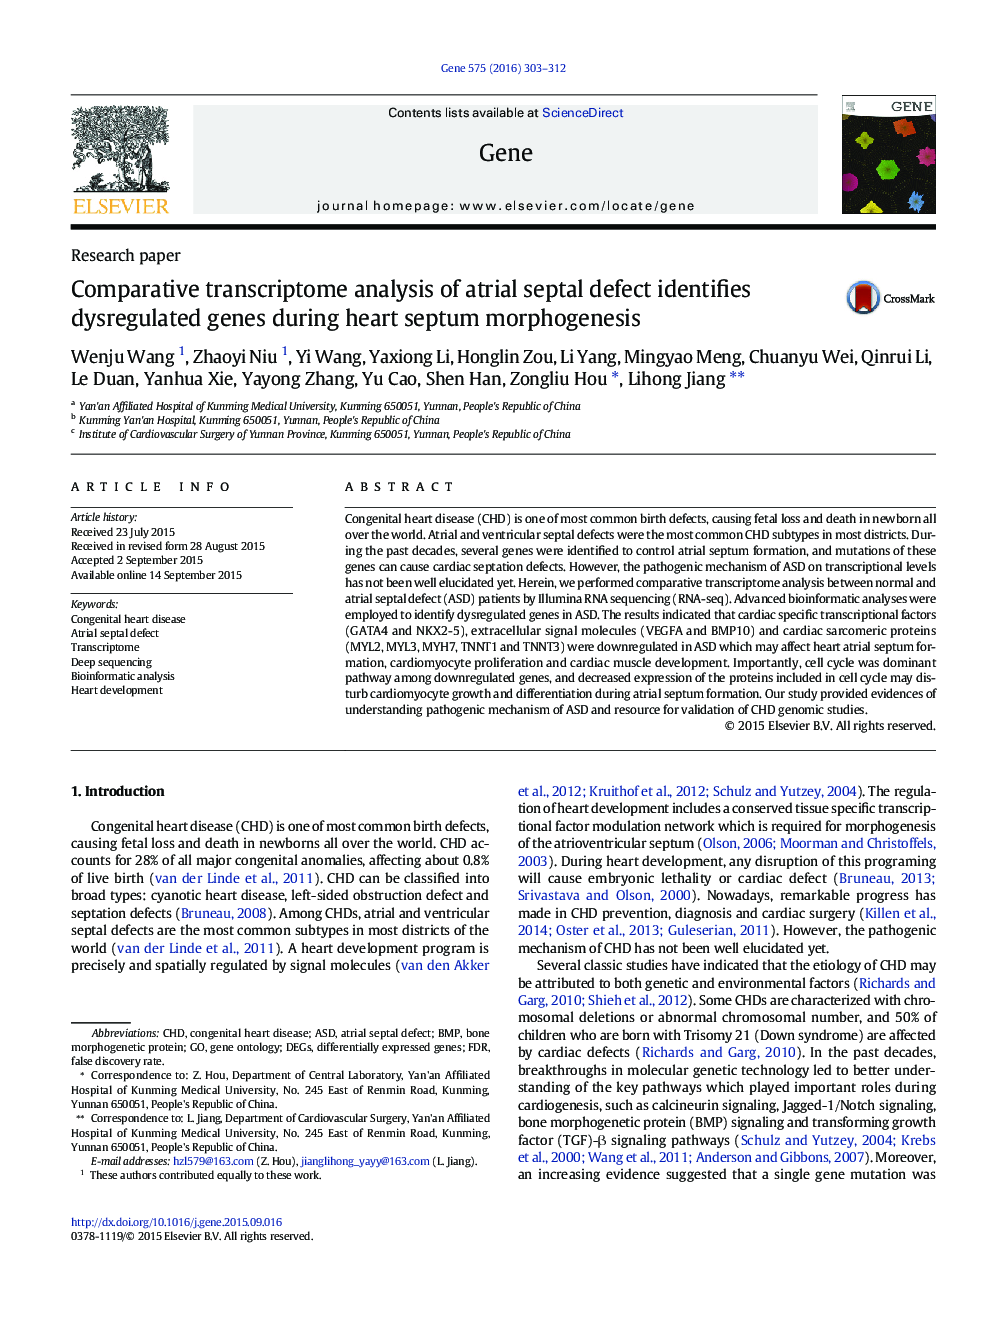 Comparative transcriptome analysis of atrial septal defect identifies dysregulated genes during heart septum morphogenesis